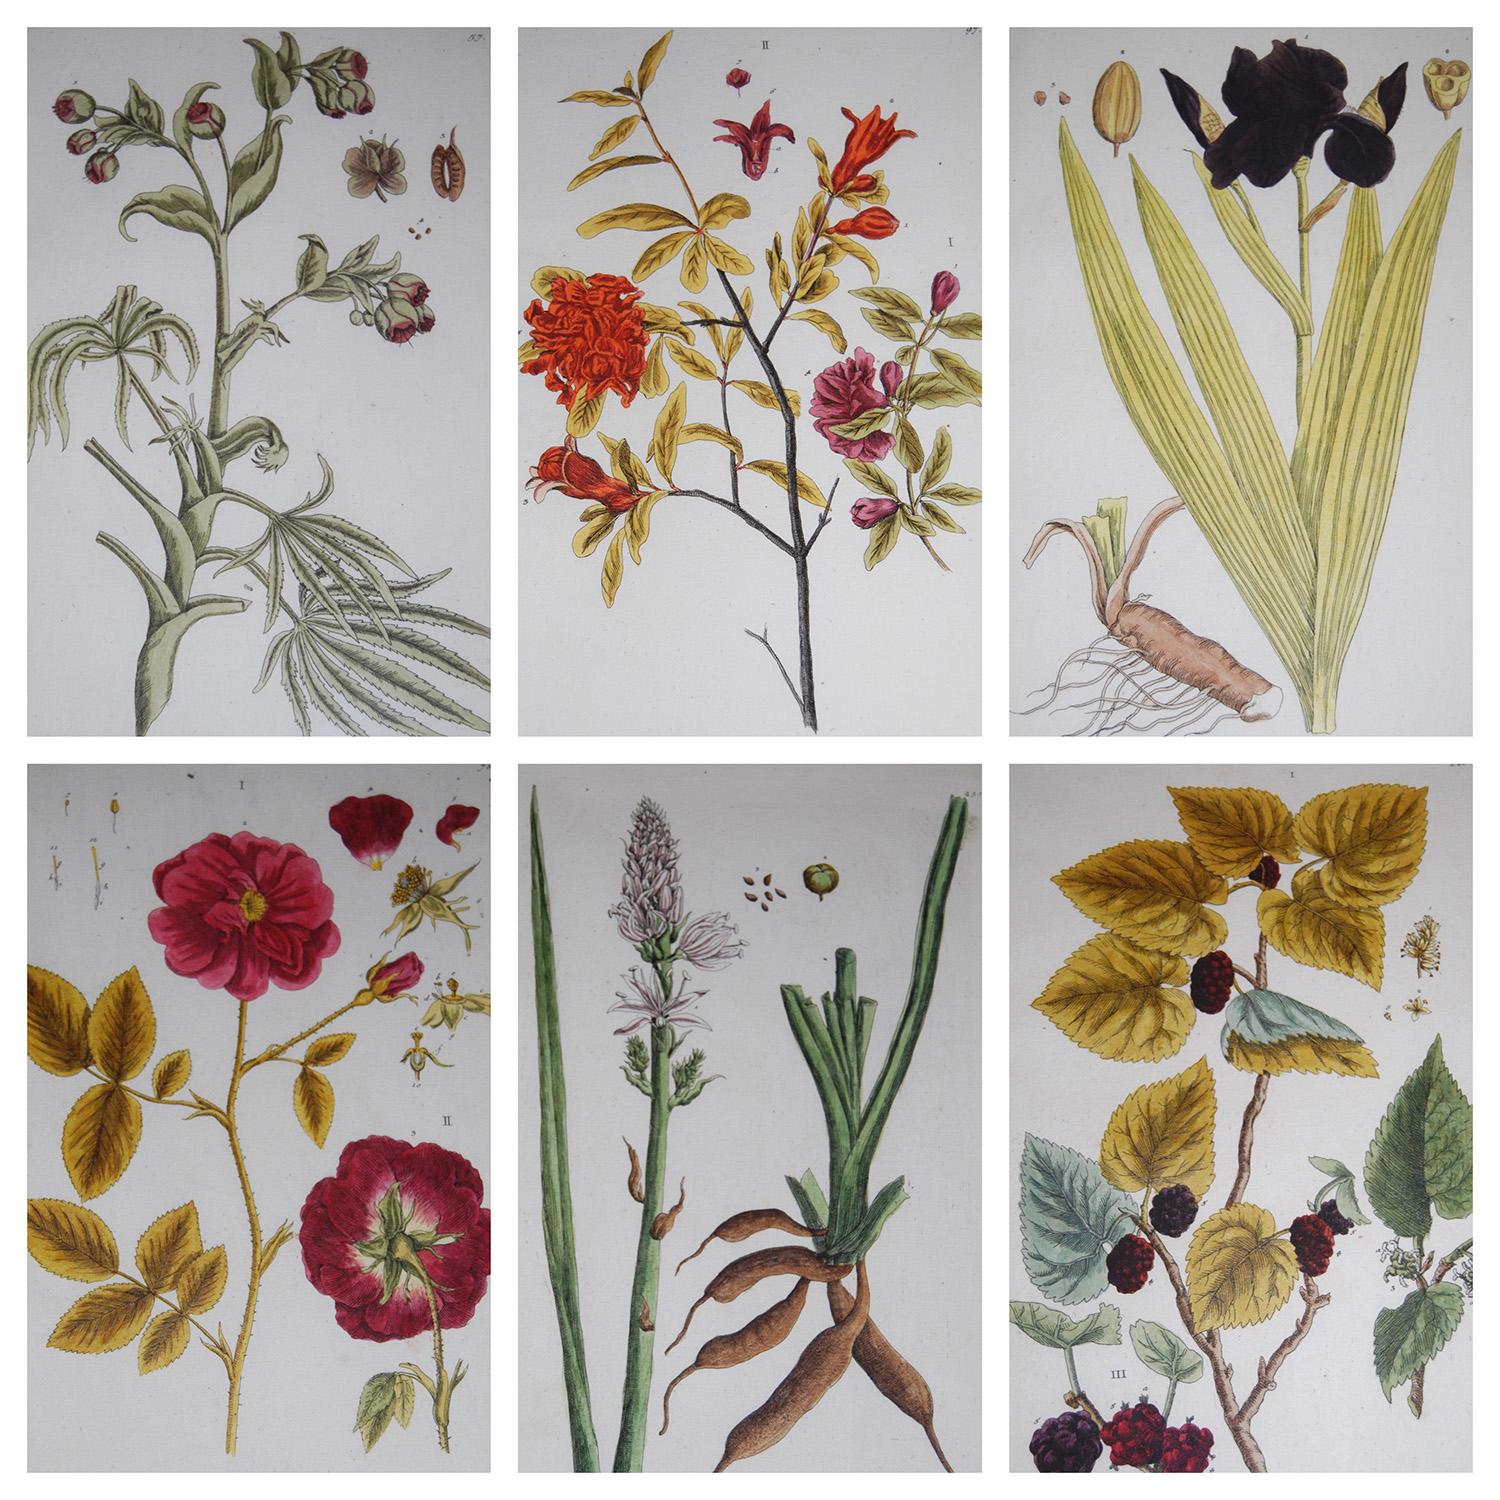 A set of 12 botanical engravings by Elizabeth Blackwell from the “Herbarium Blackwellianum